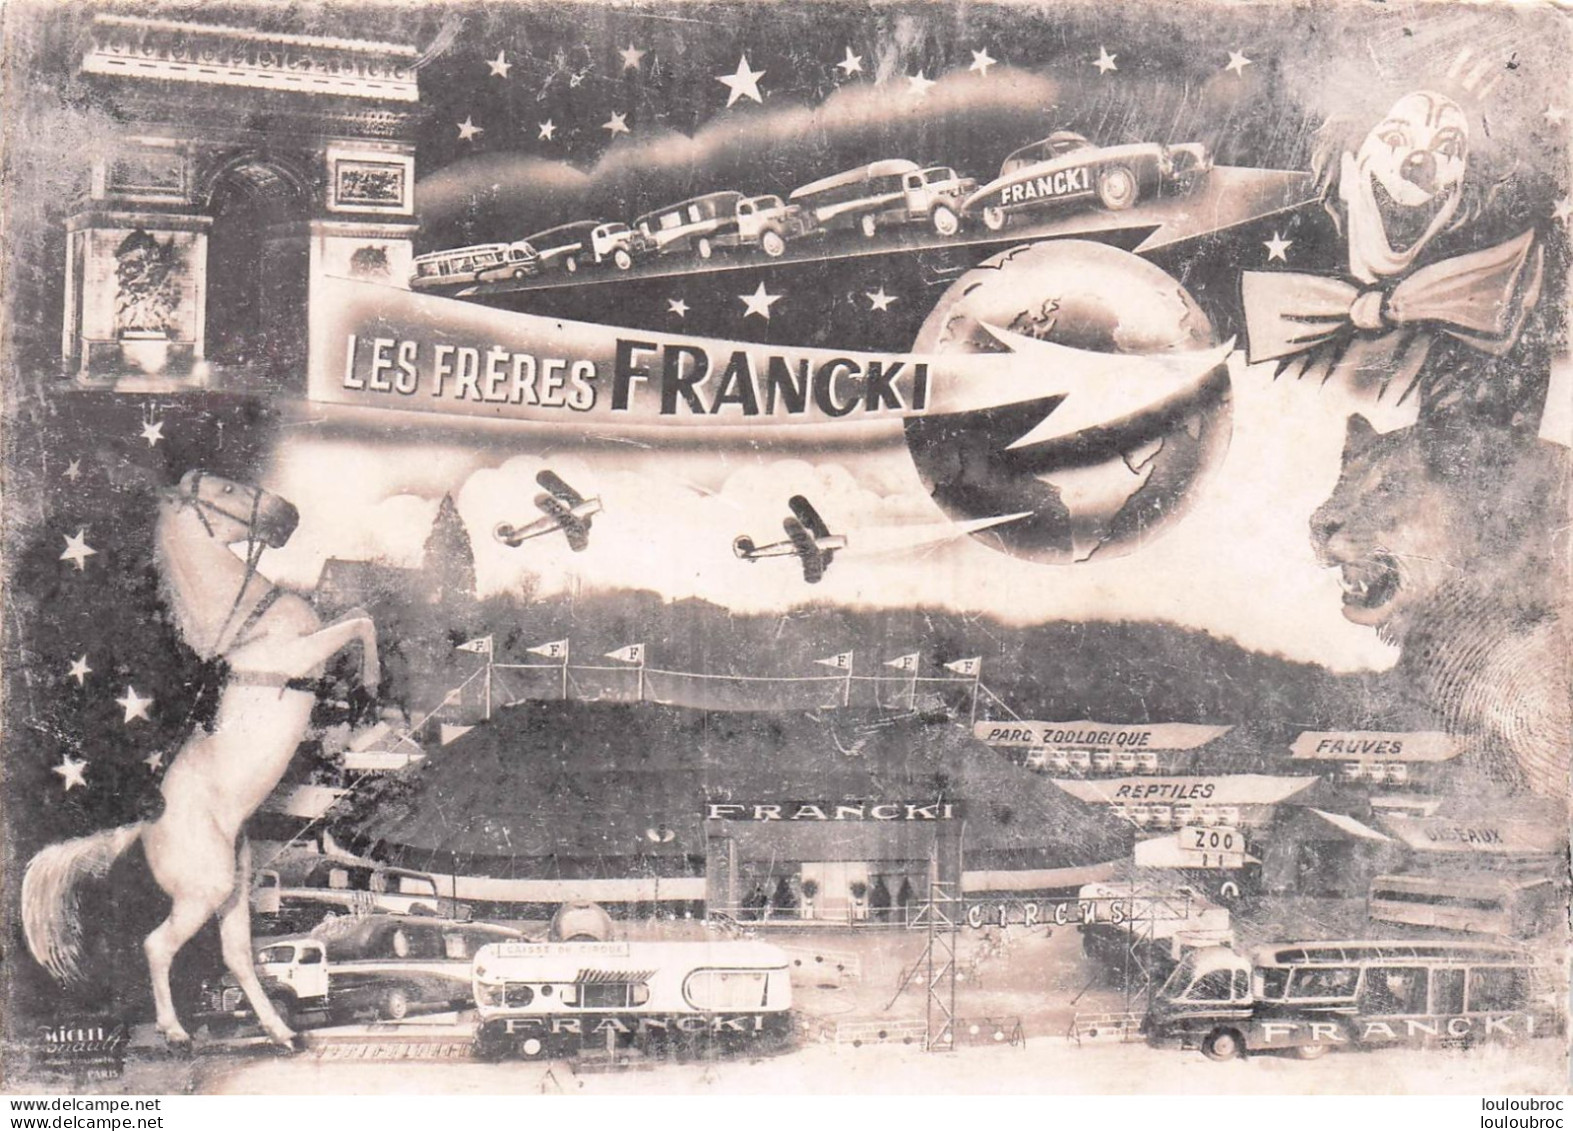 CIRQUE LES FRERES FRANCKI  INVITATION AU FESTIVAL DU CIRQUE 1960 - Circo